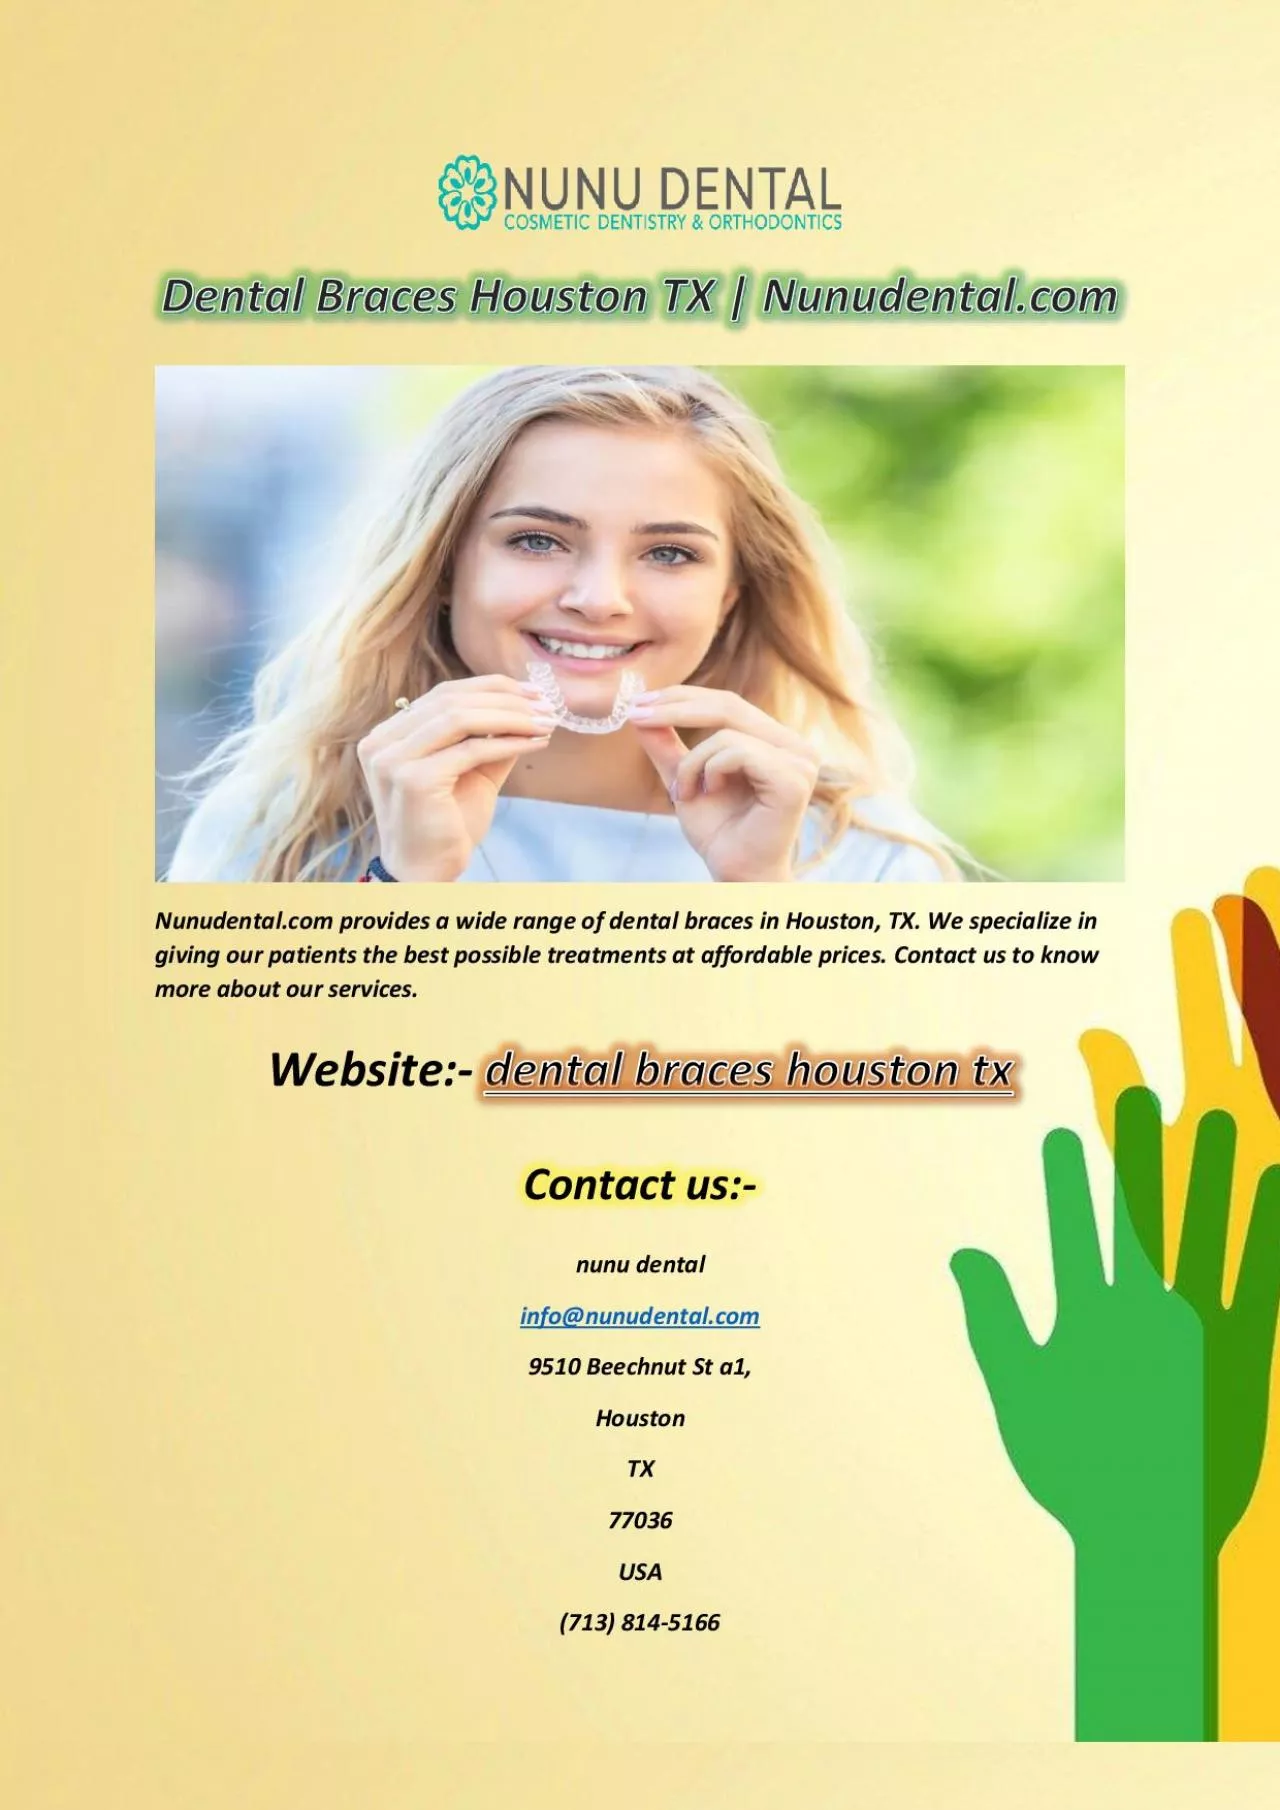 Dental Braces Houston TX | Nunudental.com